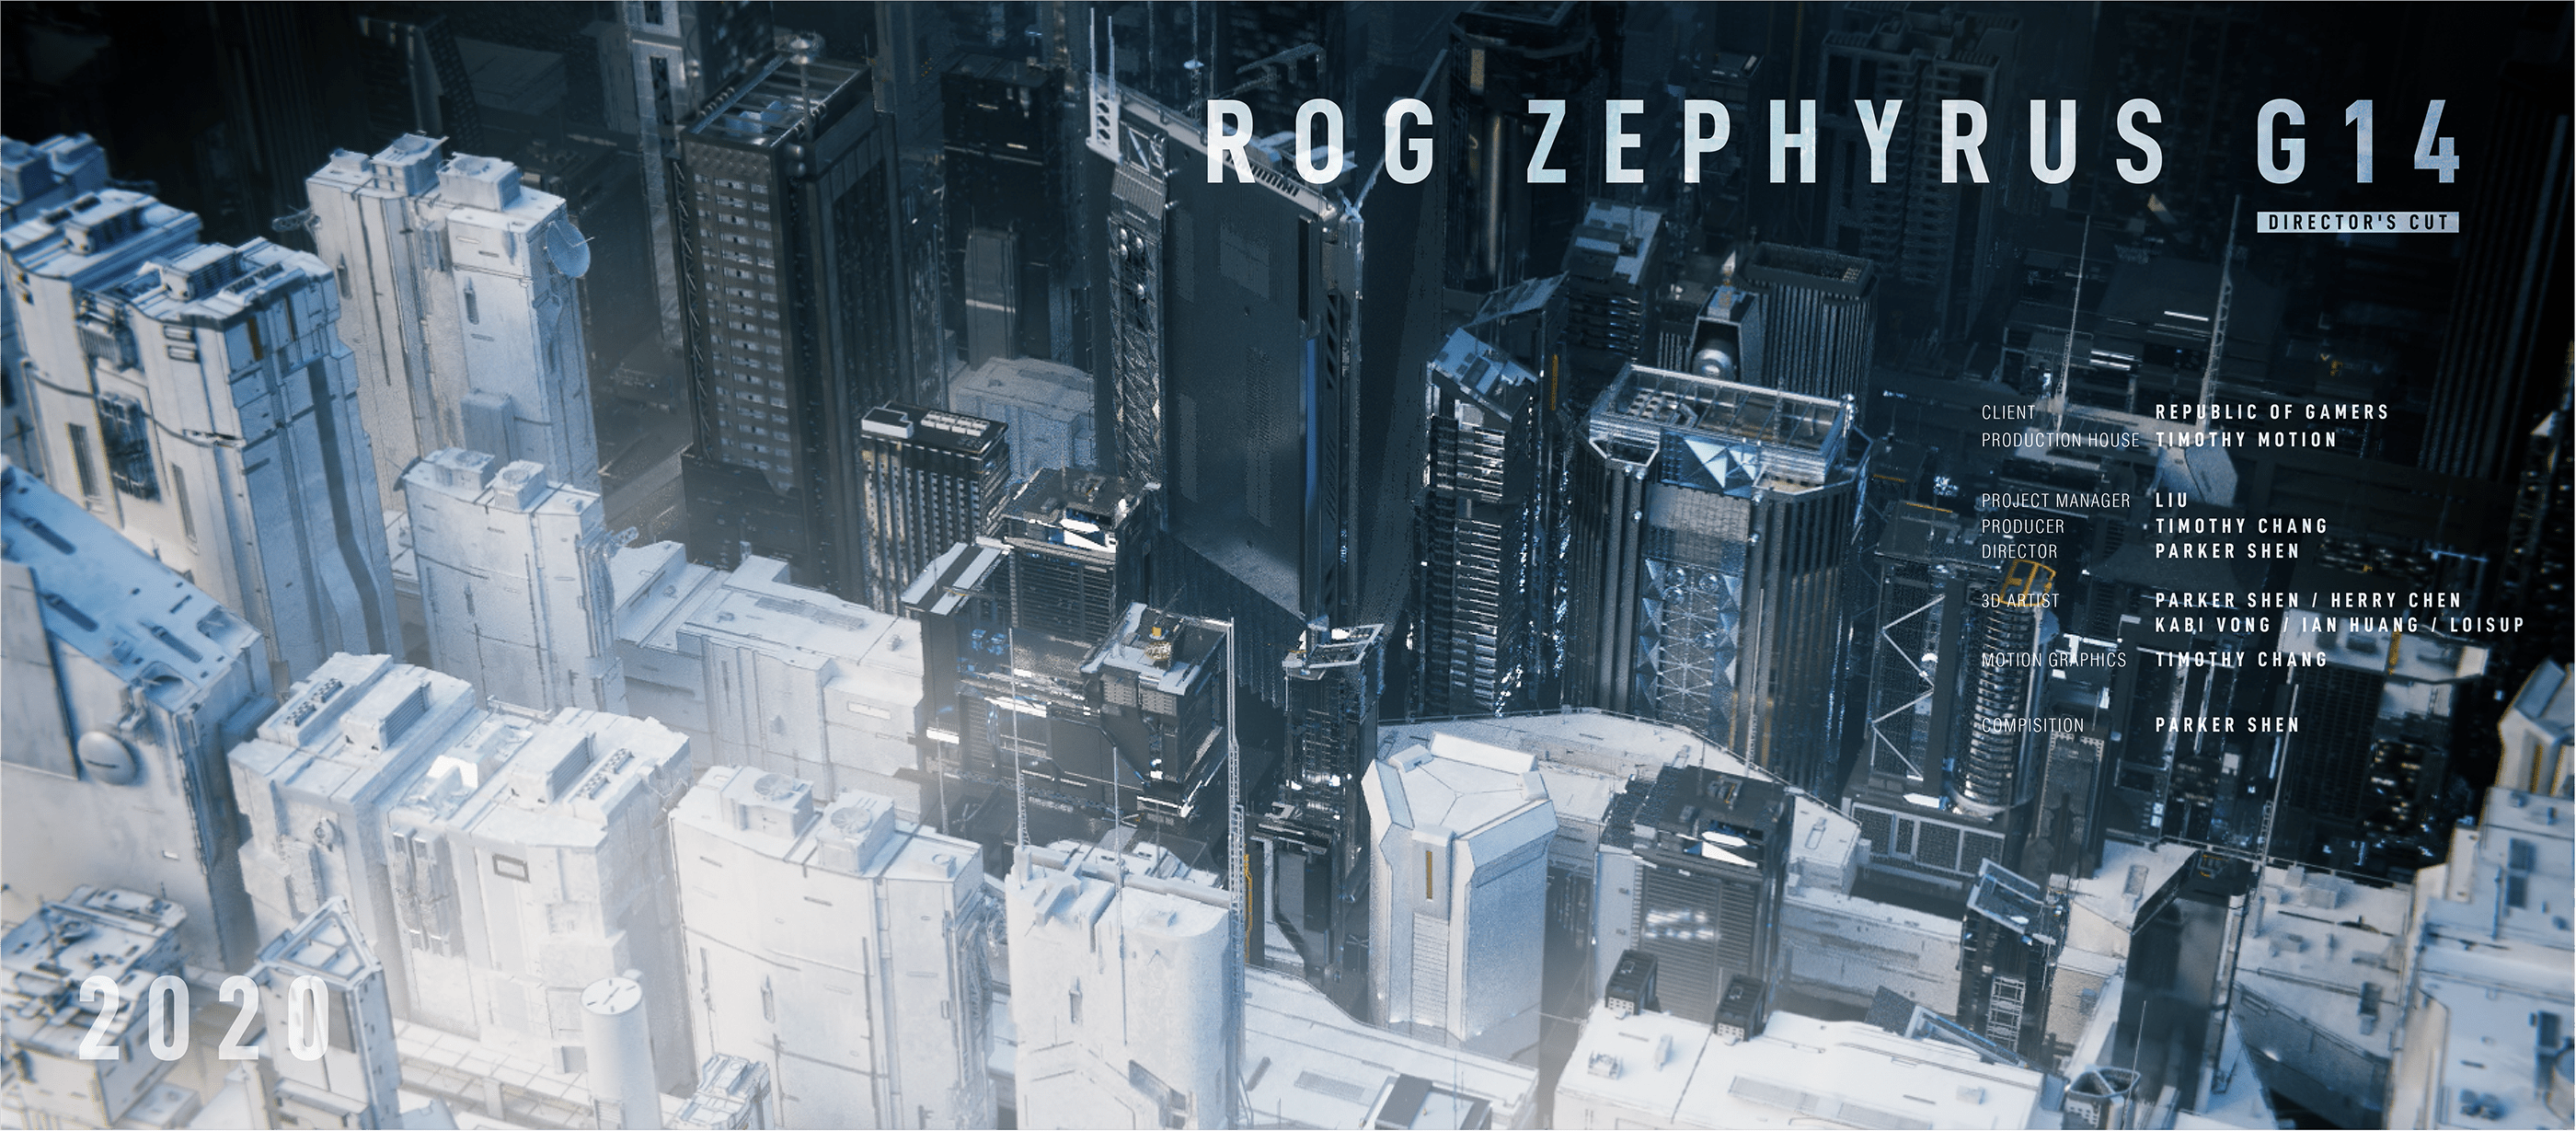 ROG Zephyrus G14 | Director's Cut on Behance9f521490300003.5e2043dc0e64b.png